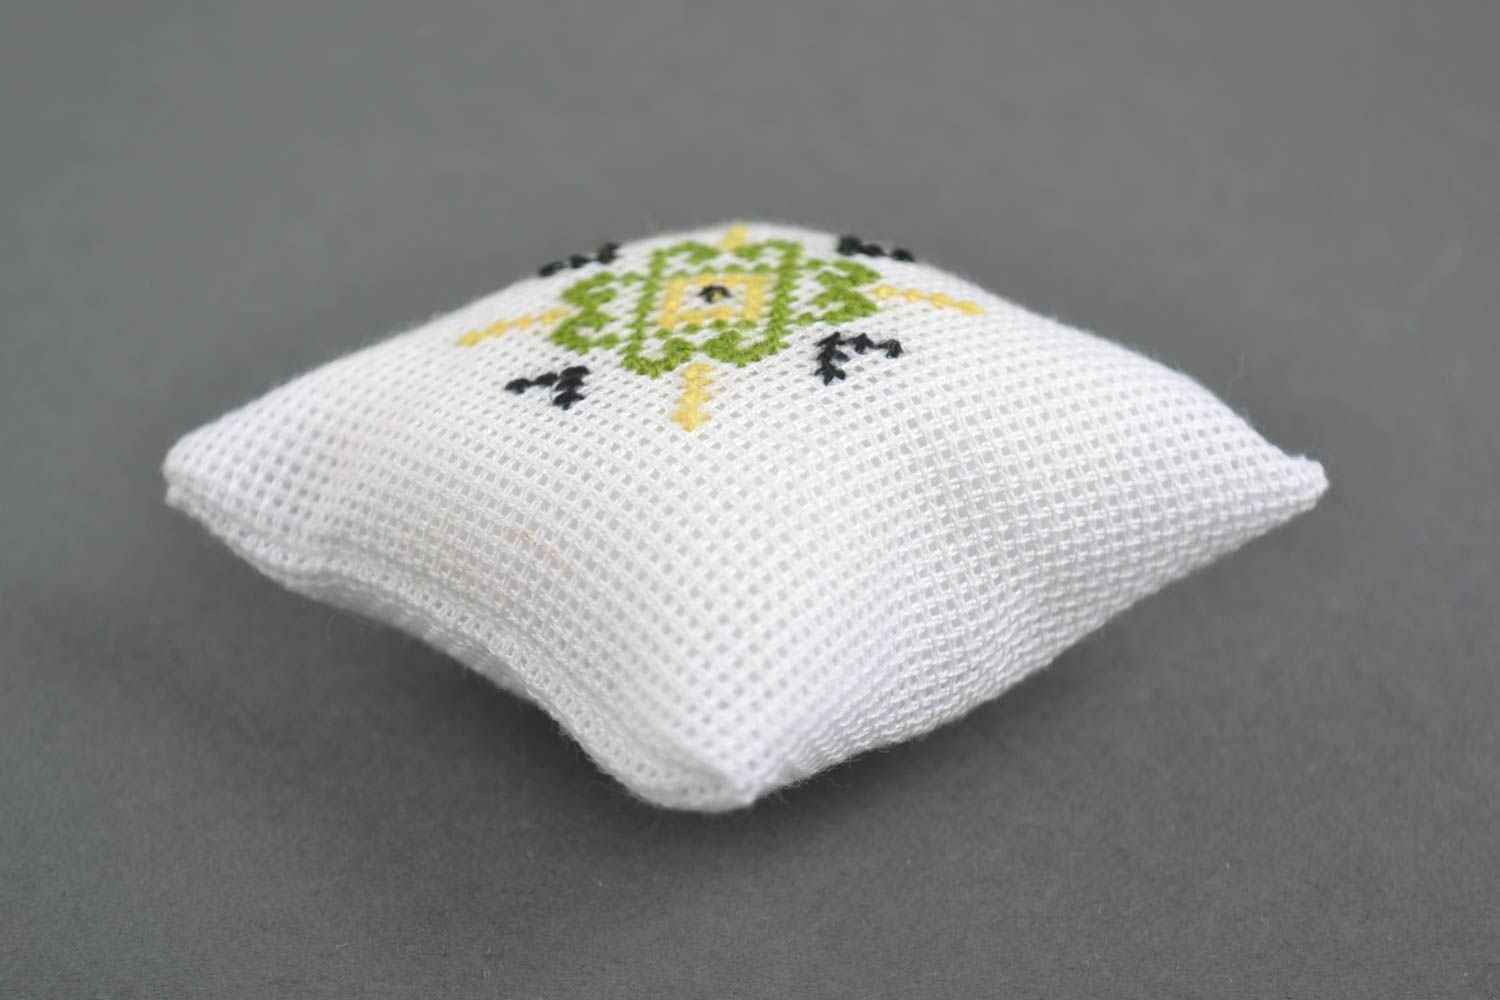 Handmade pin cushion sewing supplies embroidery kits homemade decorations photo 4